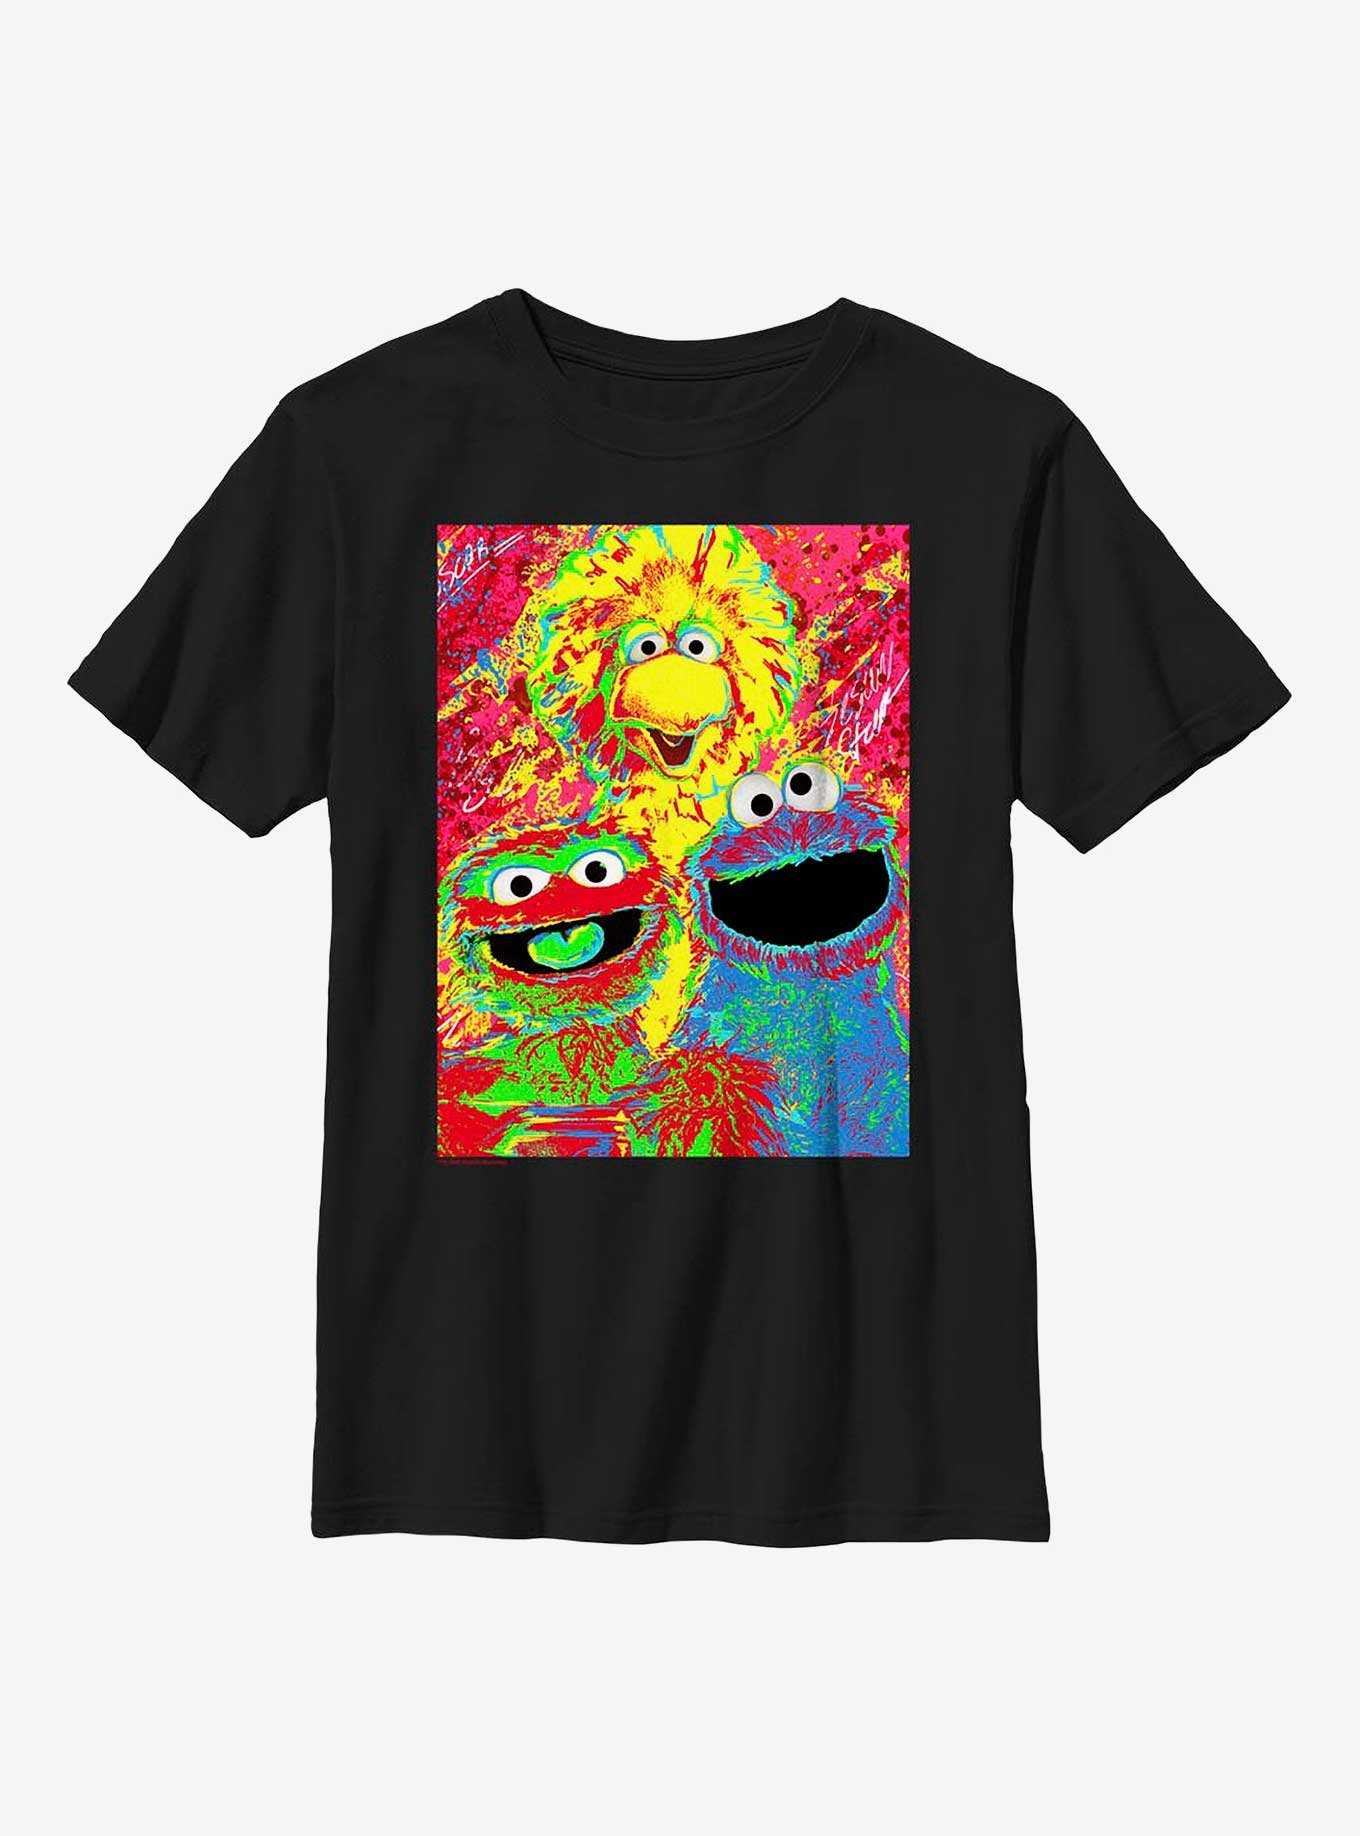 Sesame Street Big Bird, Oscar, and Cookie Monster Poster Youth T-Shirt, , hi-res